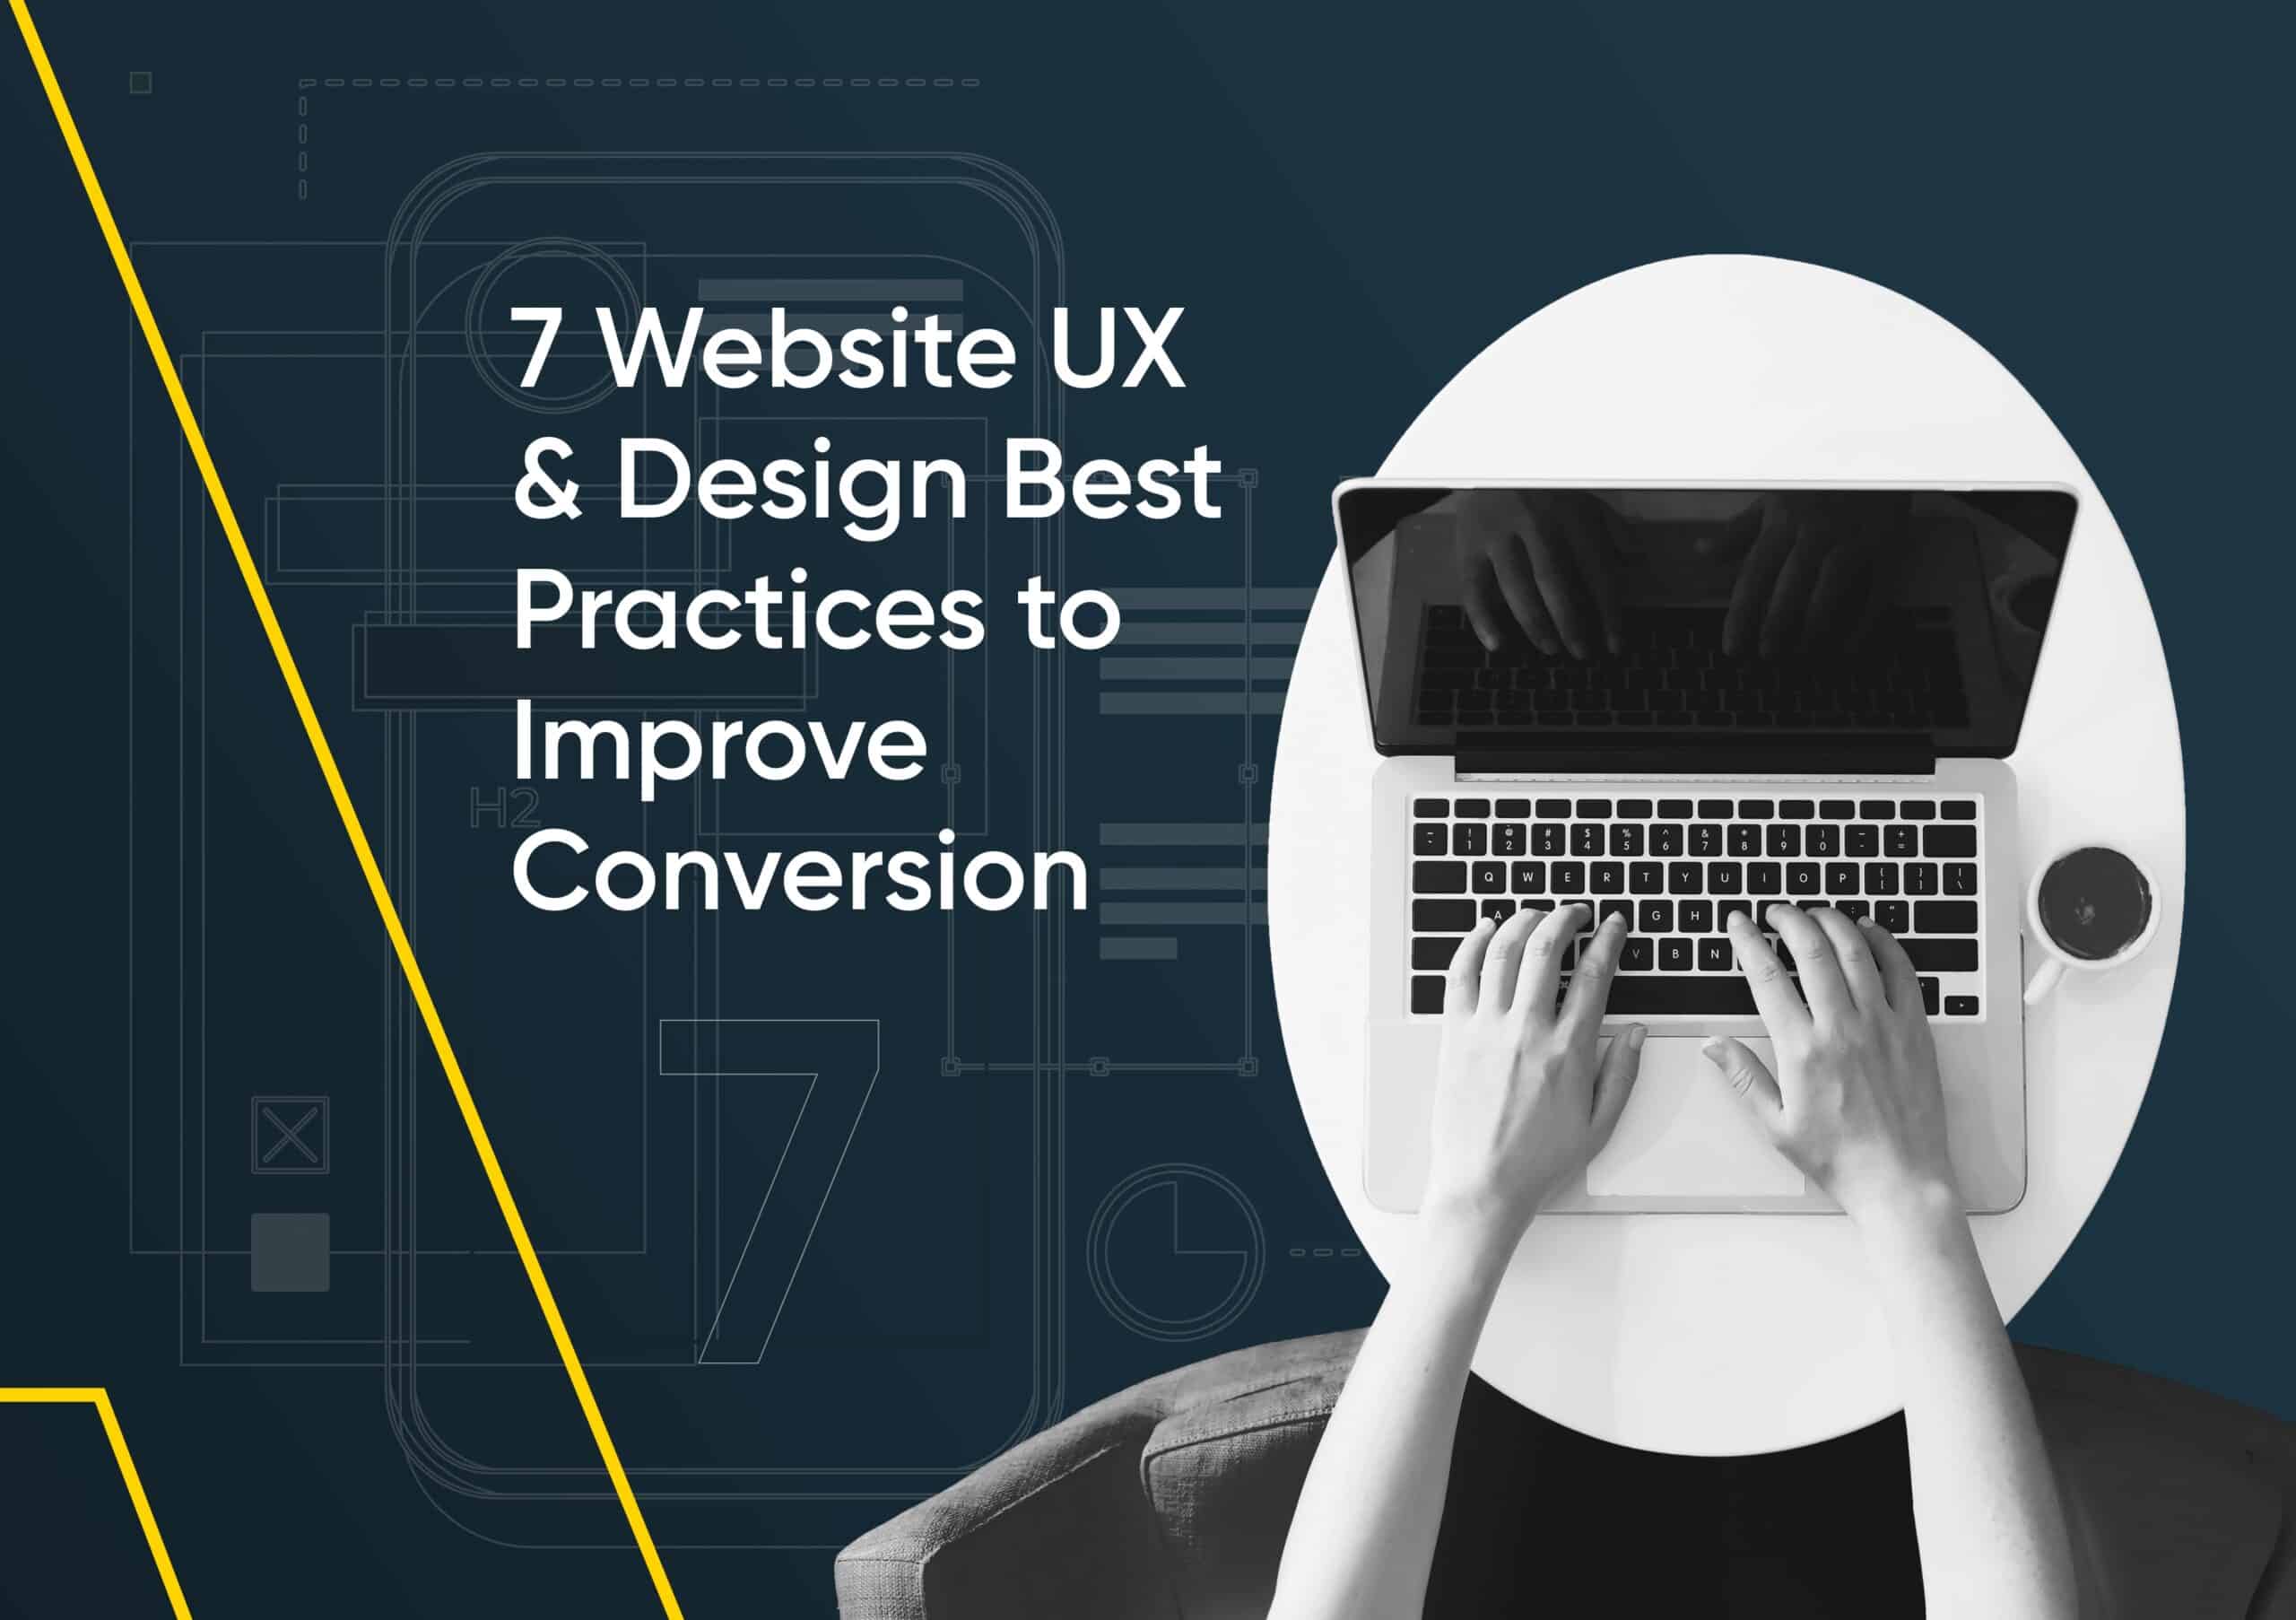 7 Website UX & Design Best Practices to Improve Conversion